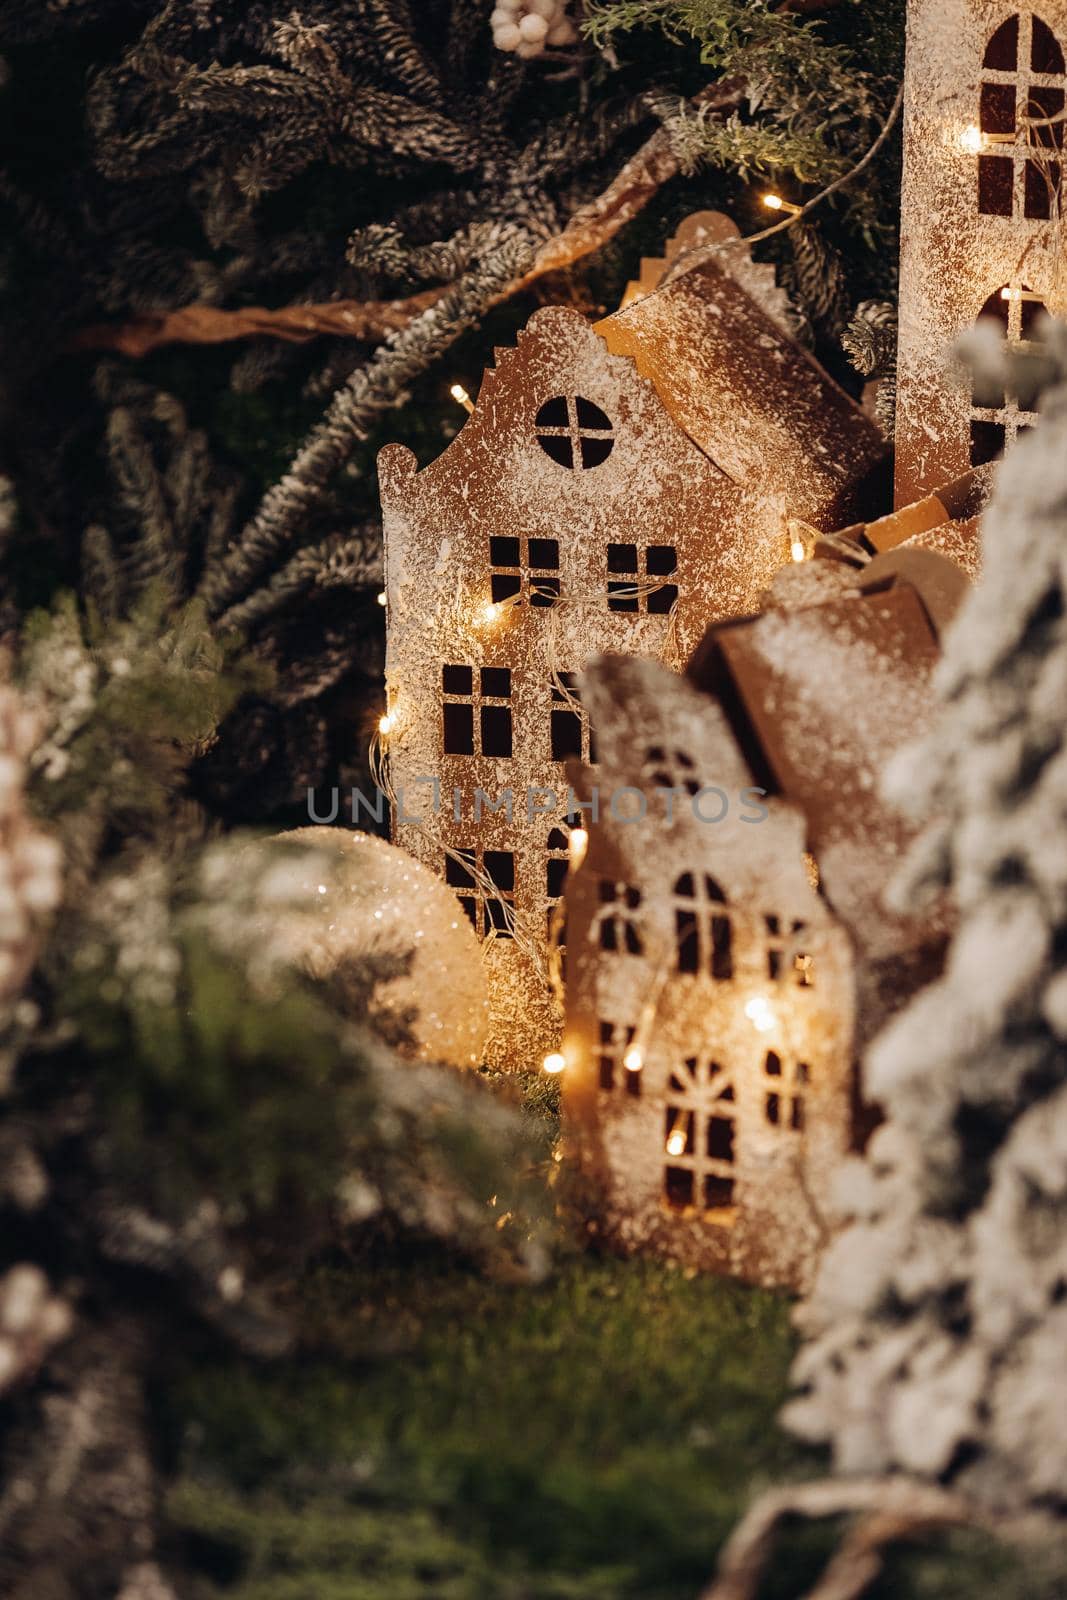 Snowed cardboard houses. by StudioLucky